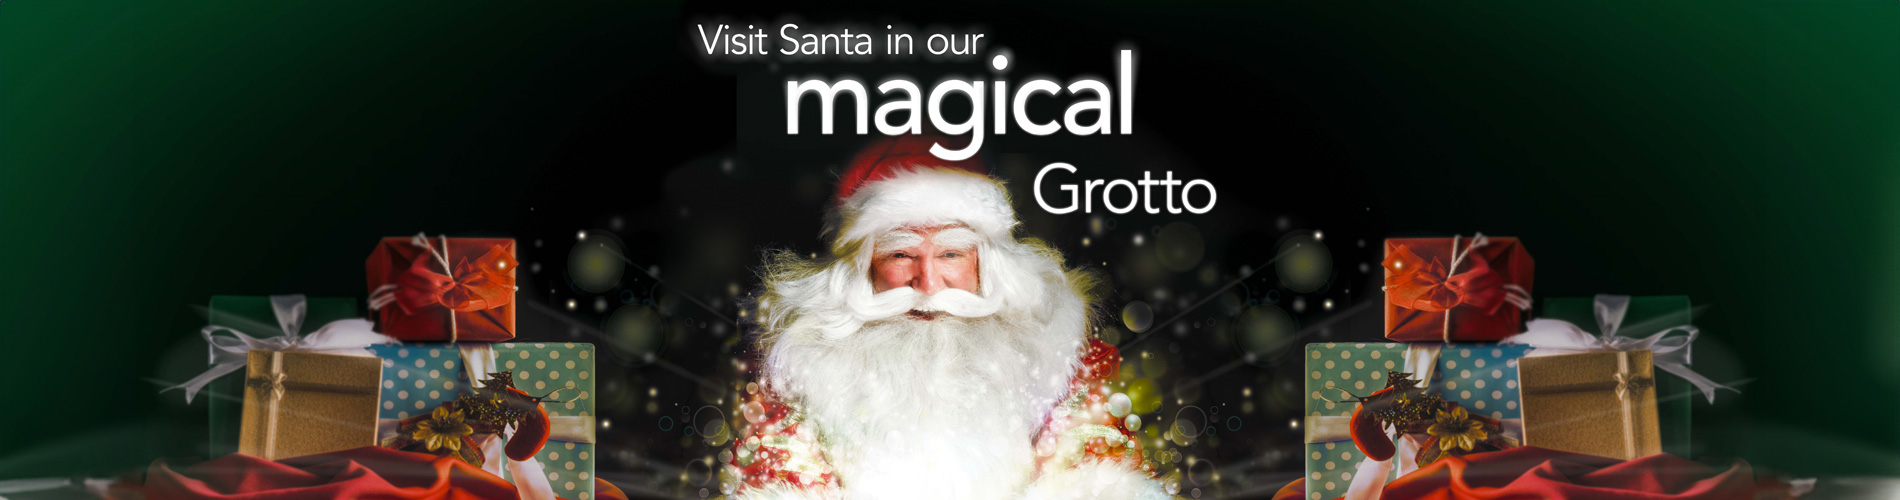 Did you visit Santa’s Grotto?